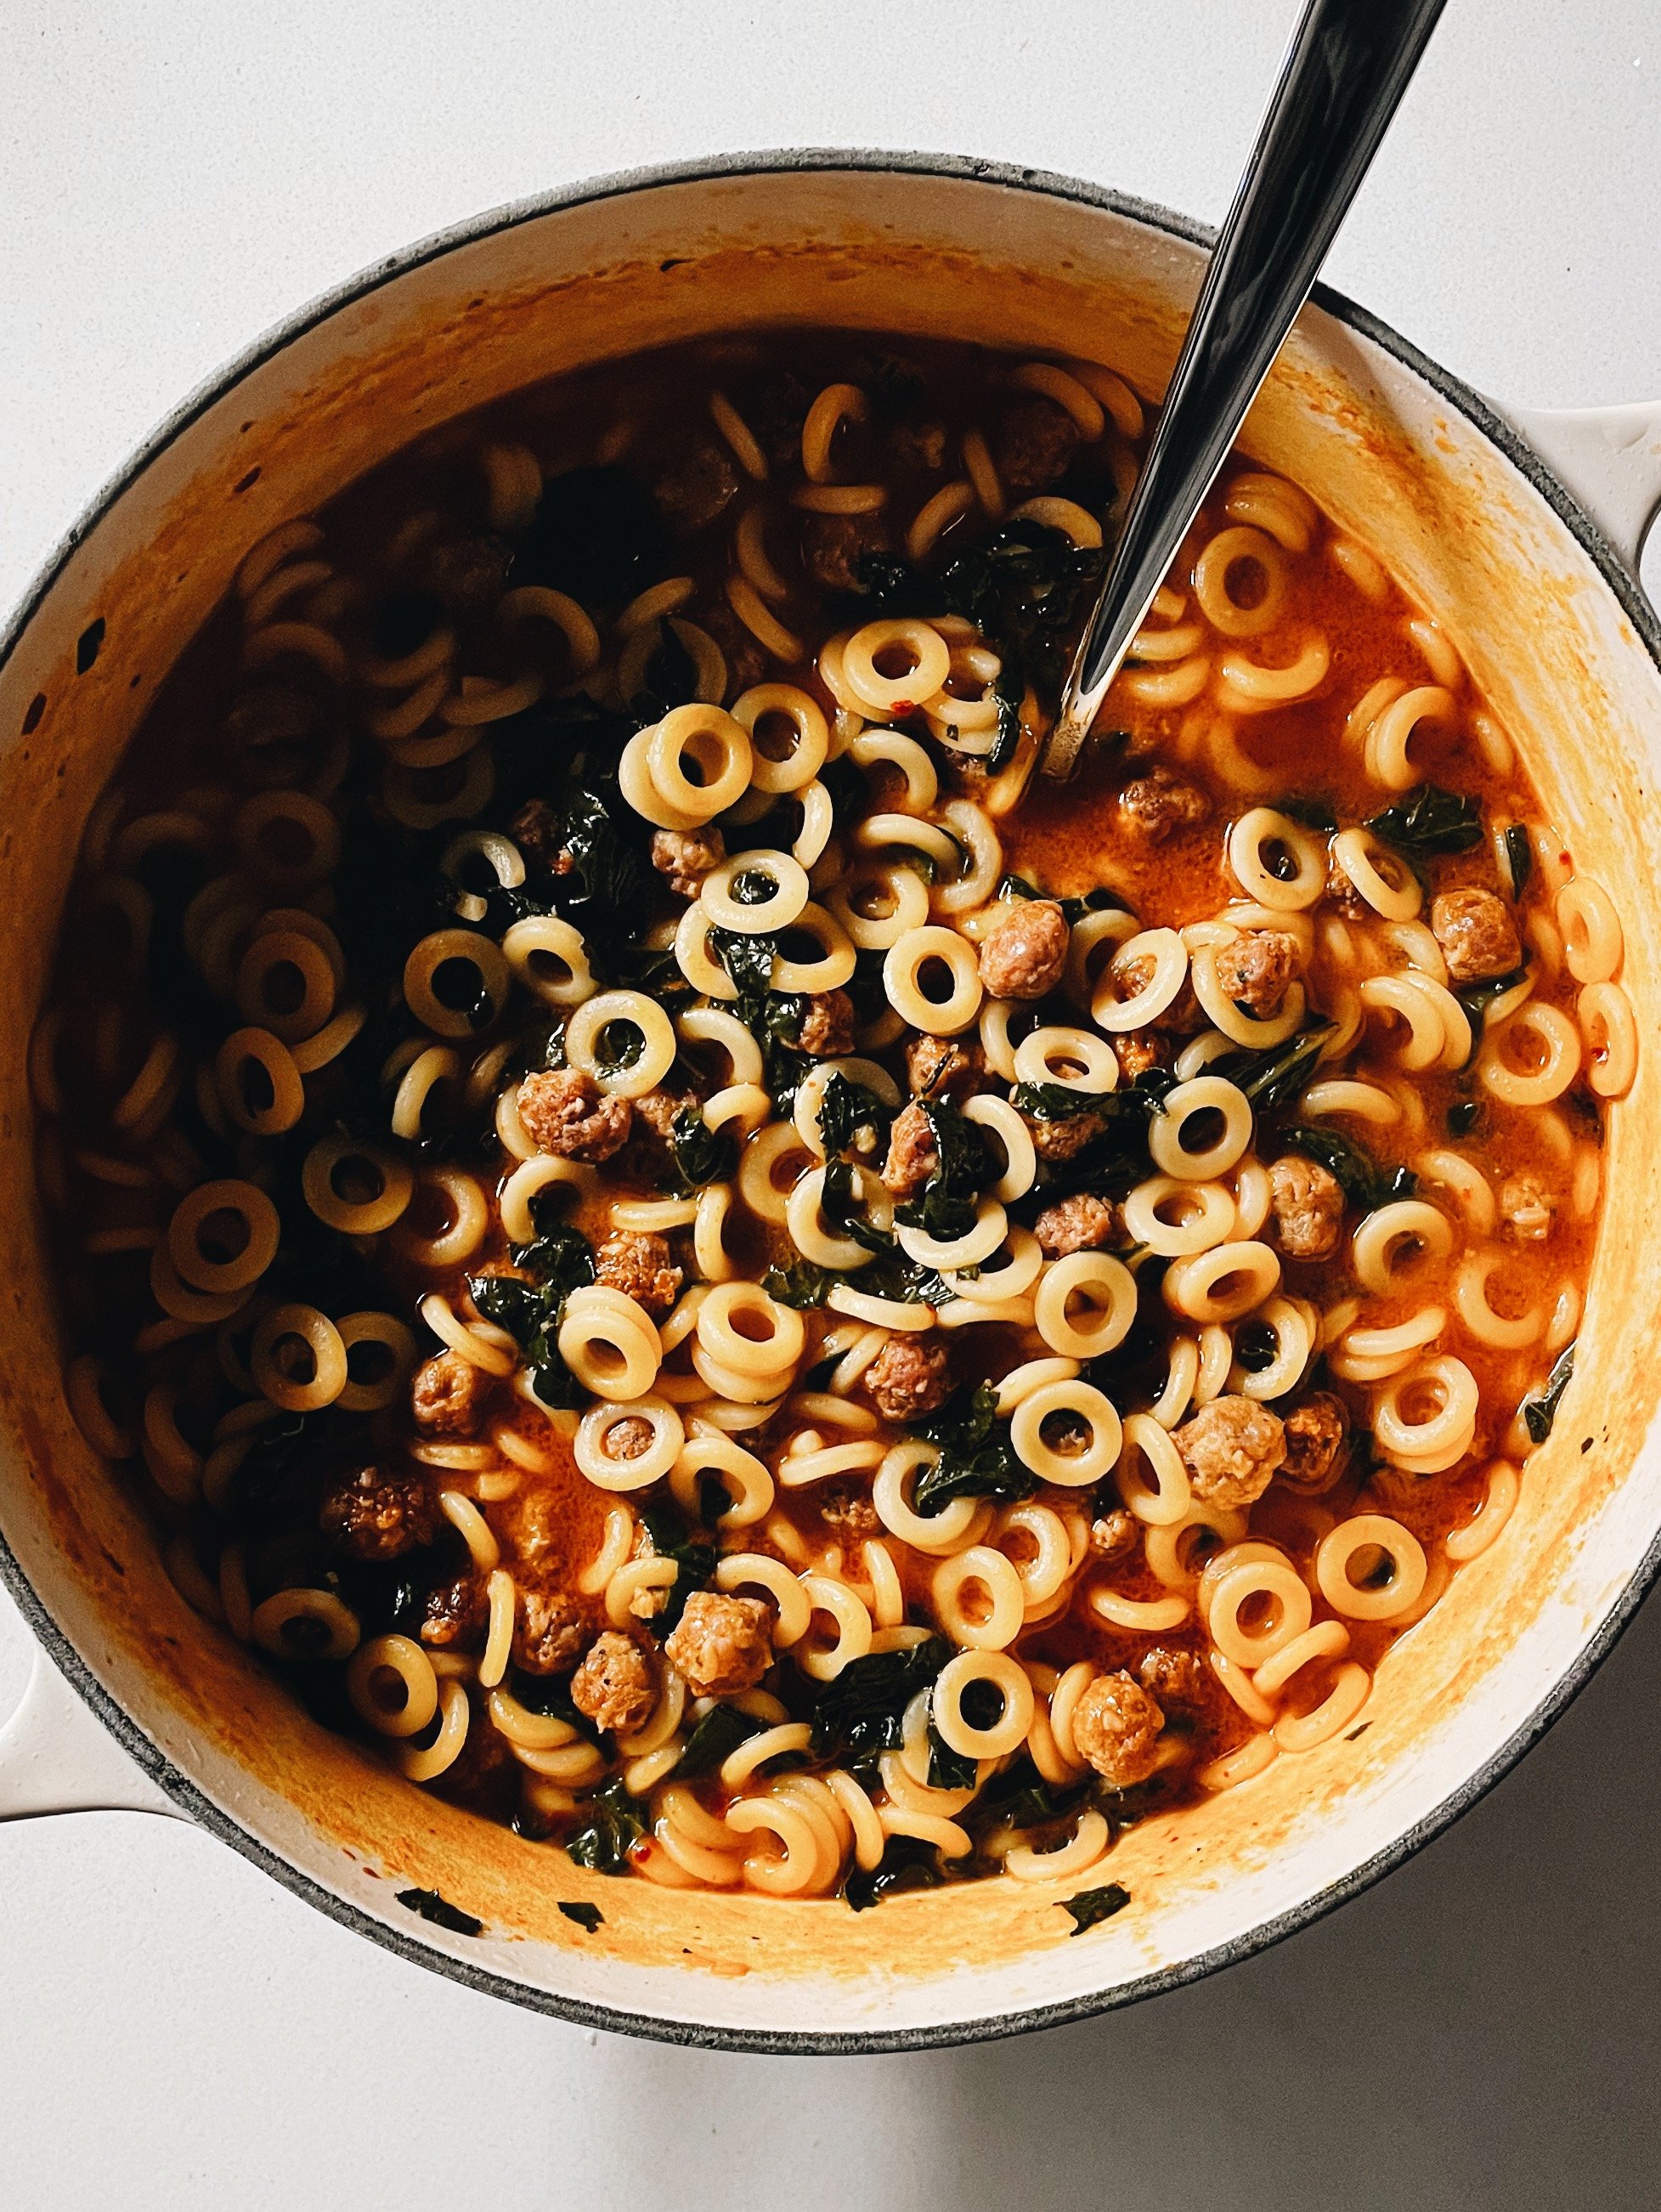 The Untold Truth Of SpaghettiOs